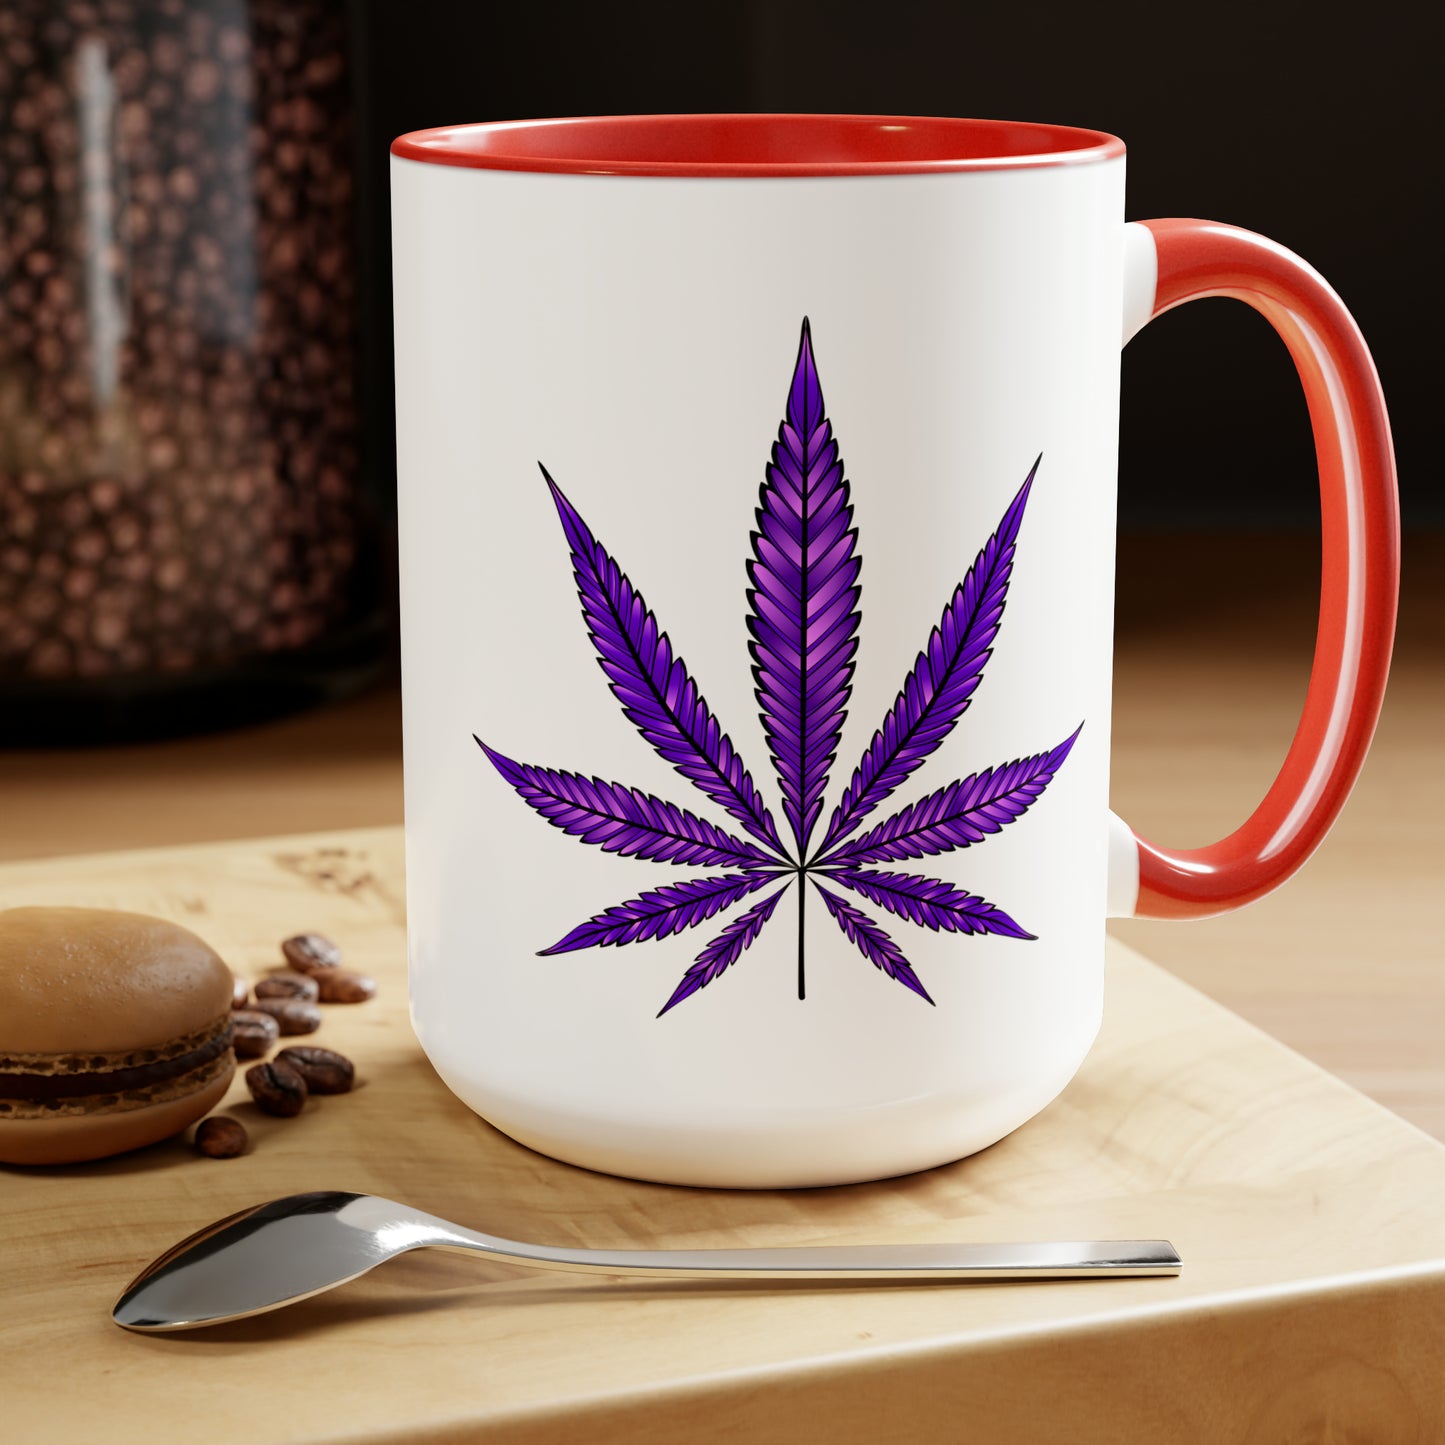 The Purple Haze Marijuana Coffee Mug with cannabis leaf design on wooden table, accompanied by coffee beans, a spoon, and a macaron.